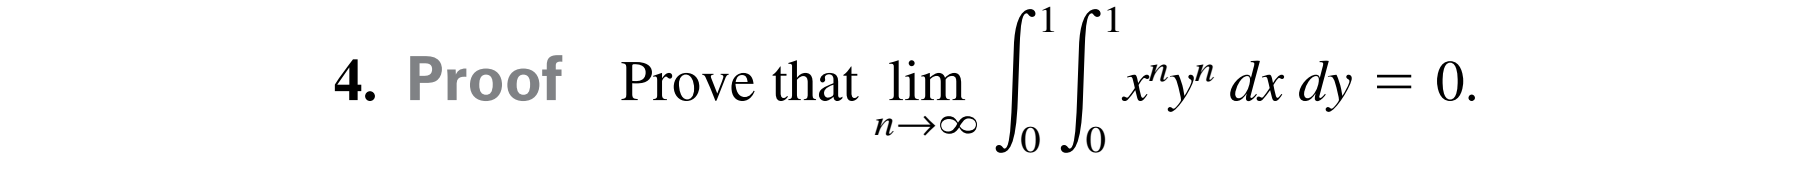 4. Proof Prove that lim
x"y" dx dy = 0.
n→∞
